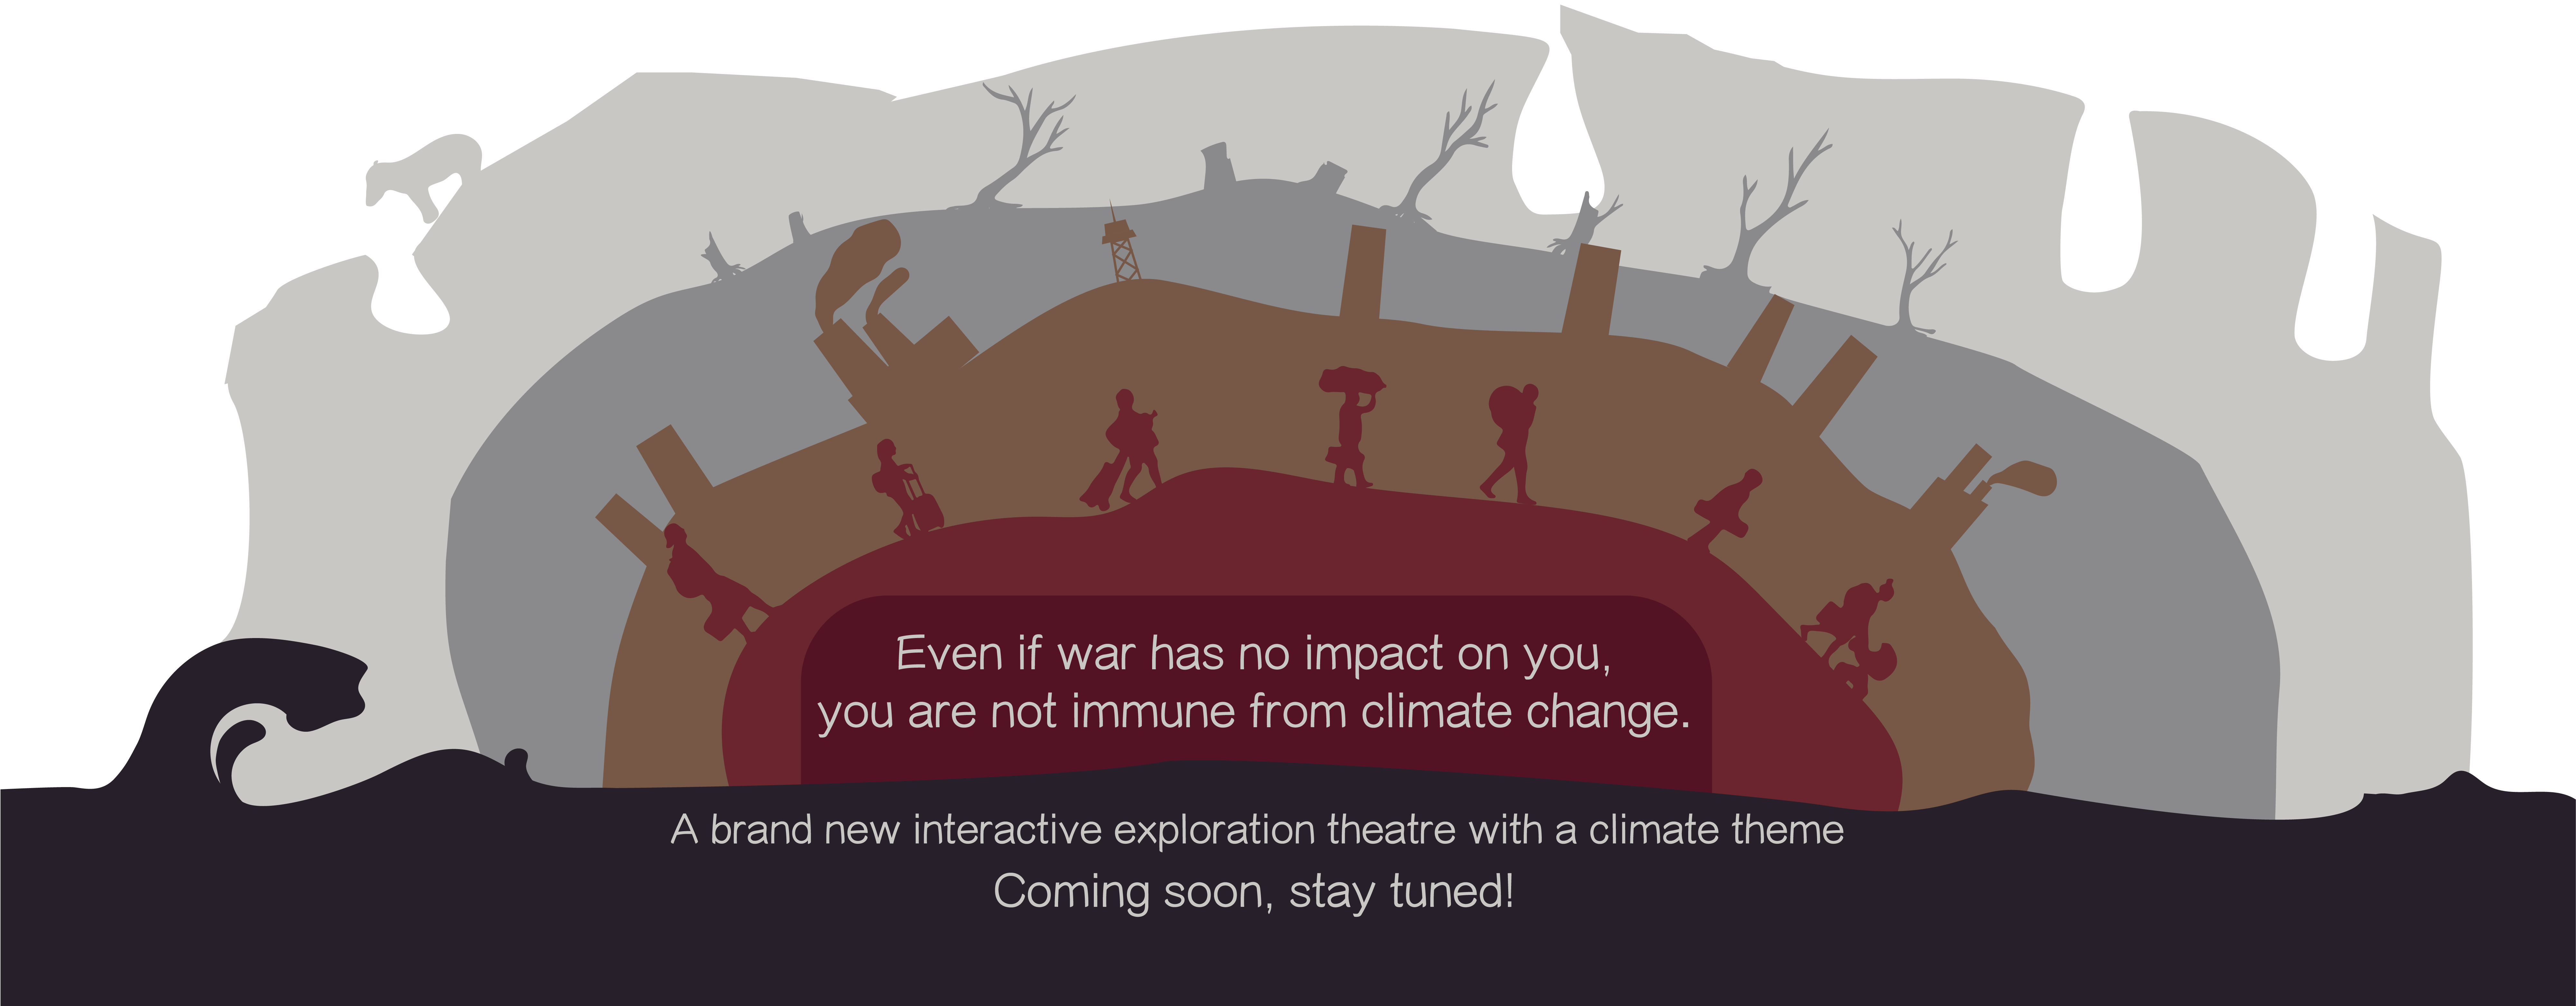 new Interactive exploration theatre